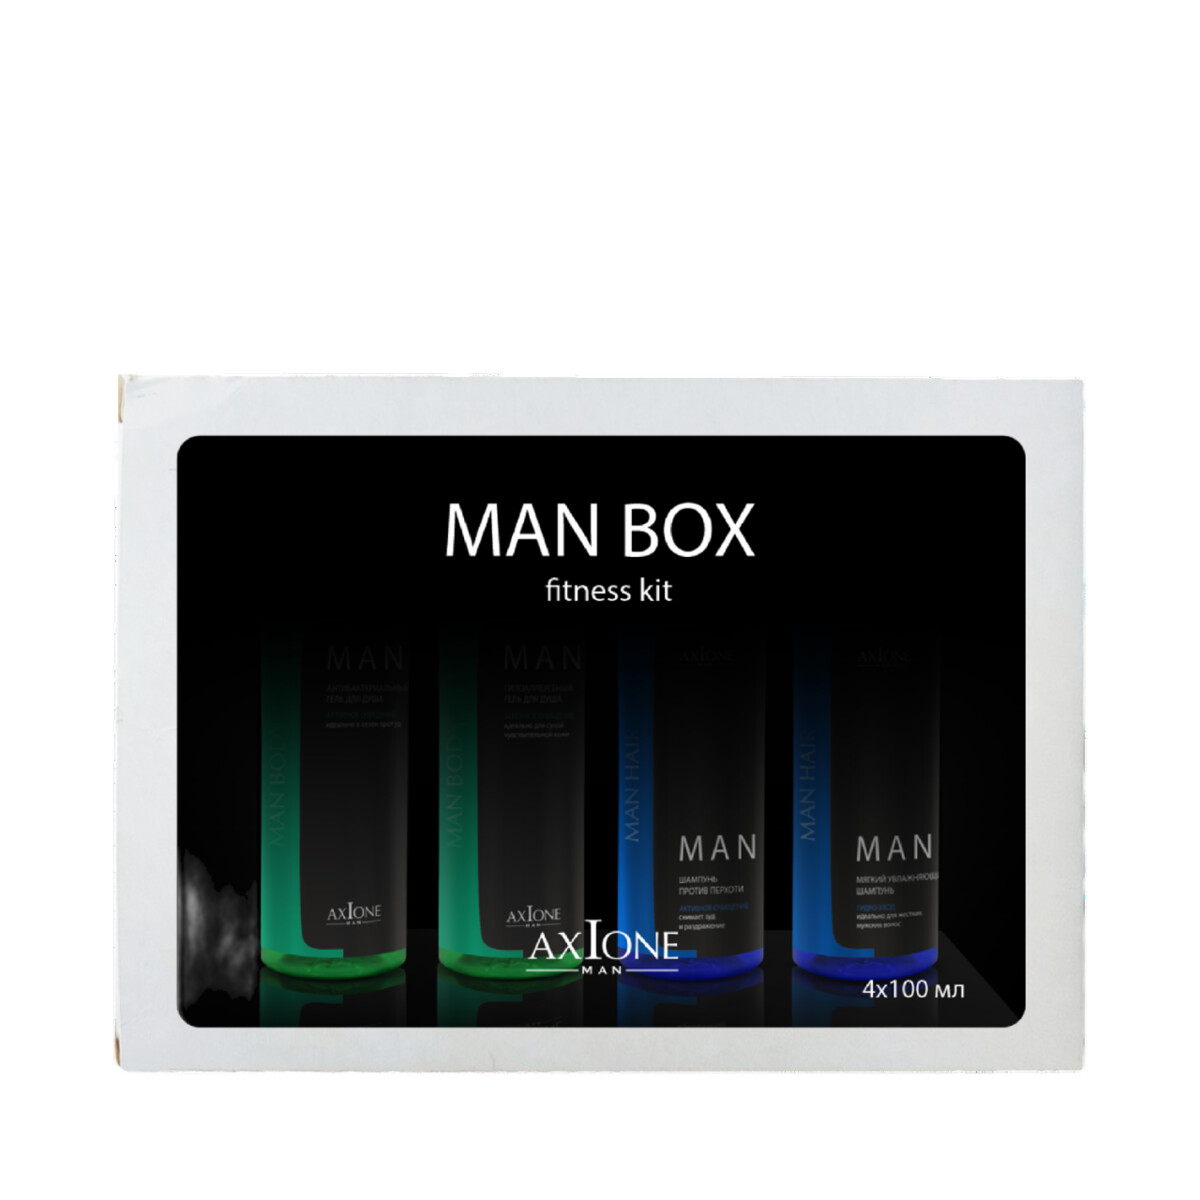  man box fitness kit